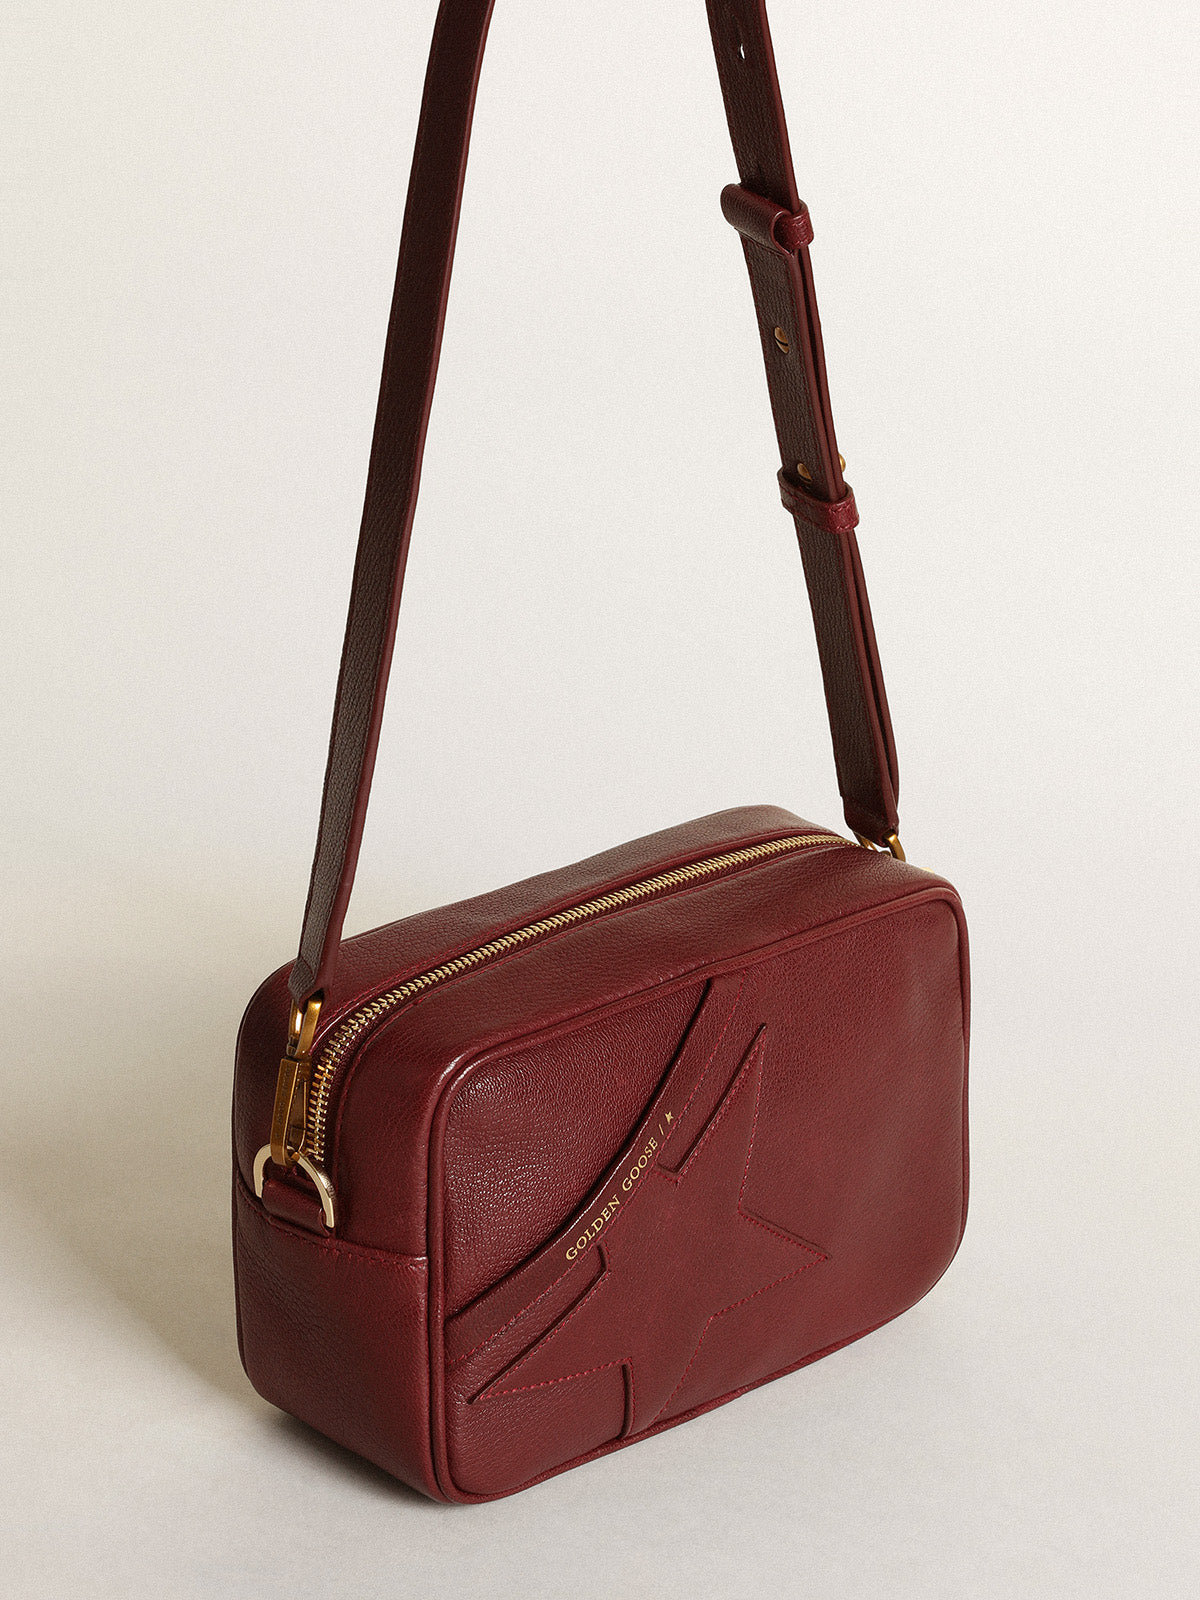 Star Bag in Burgundy Leather